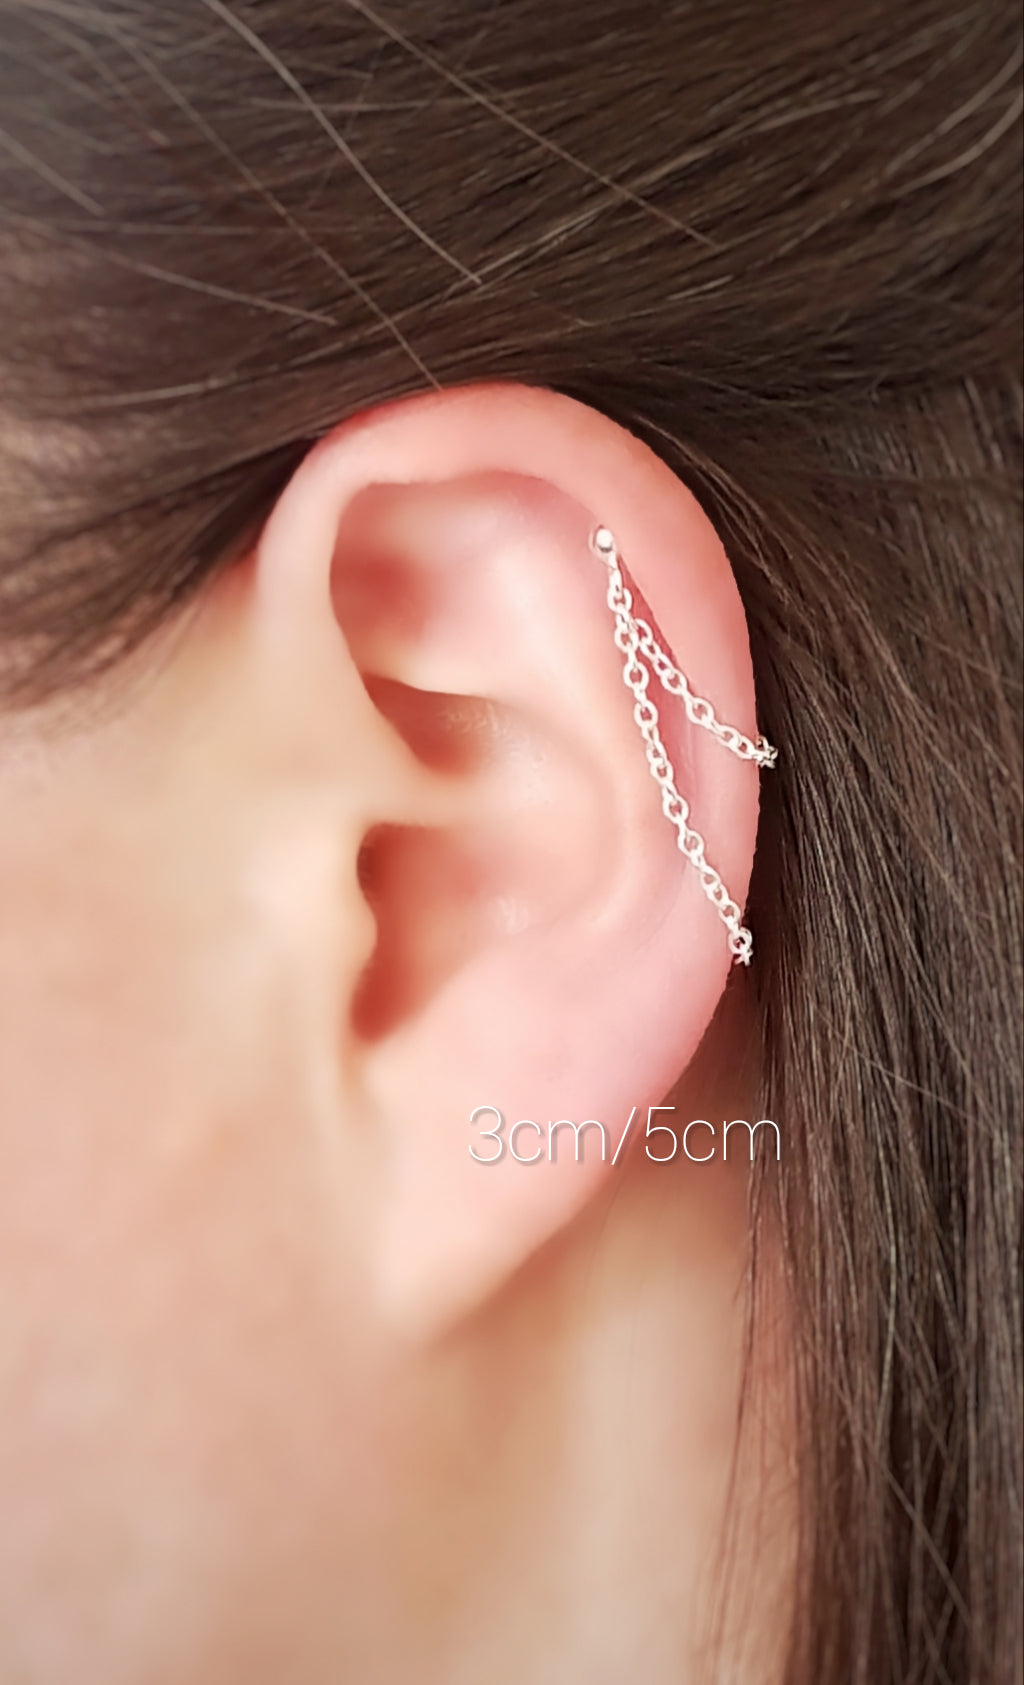 Tiny Cross Chain Earring Double Lobe to Cartilage Helix Chain  Etsy  Cartilage  earrings chain Ear jewelry Helix piercing jewelry